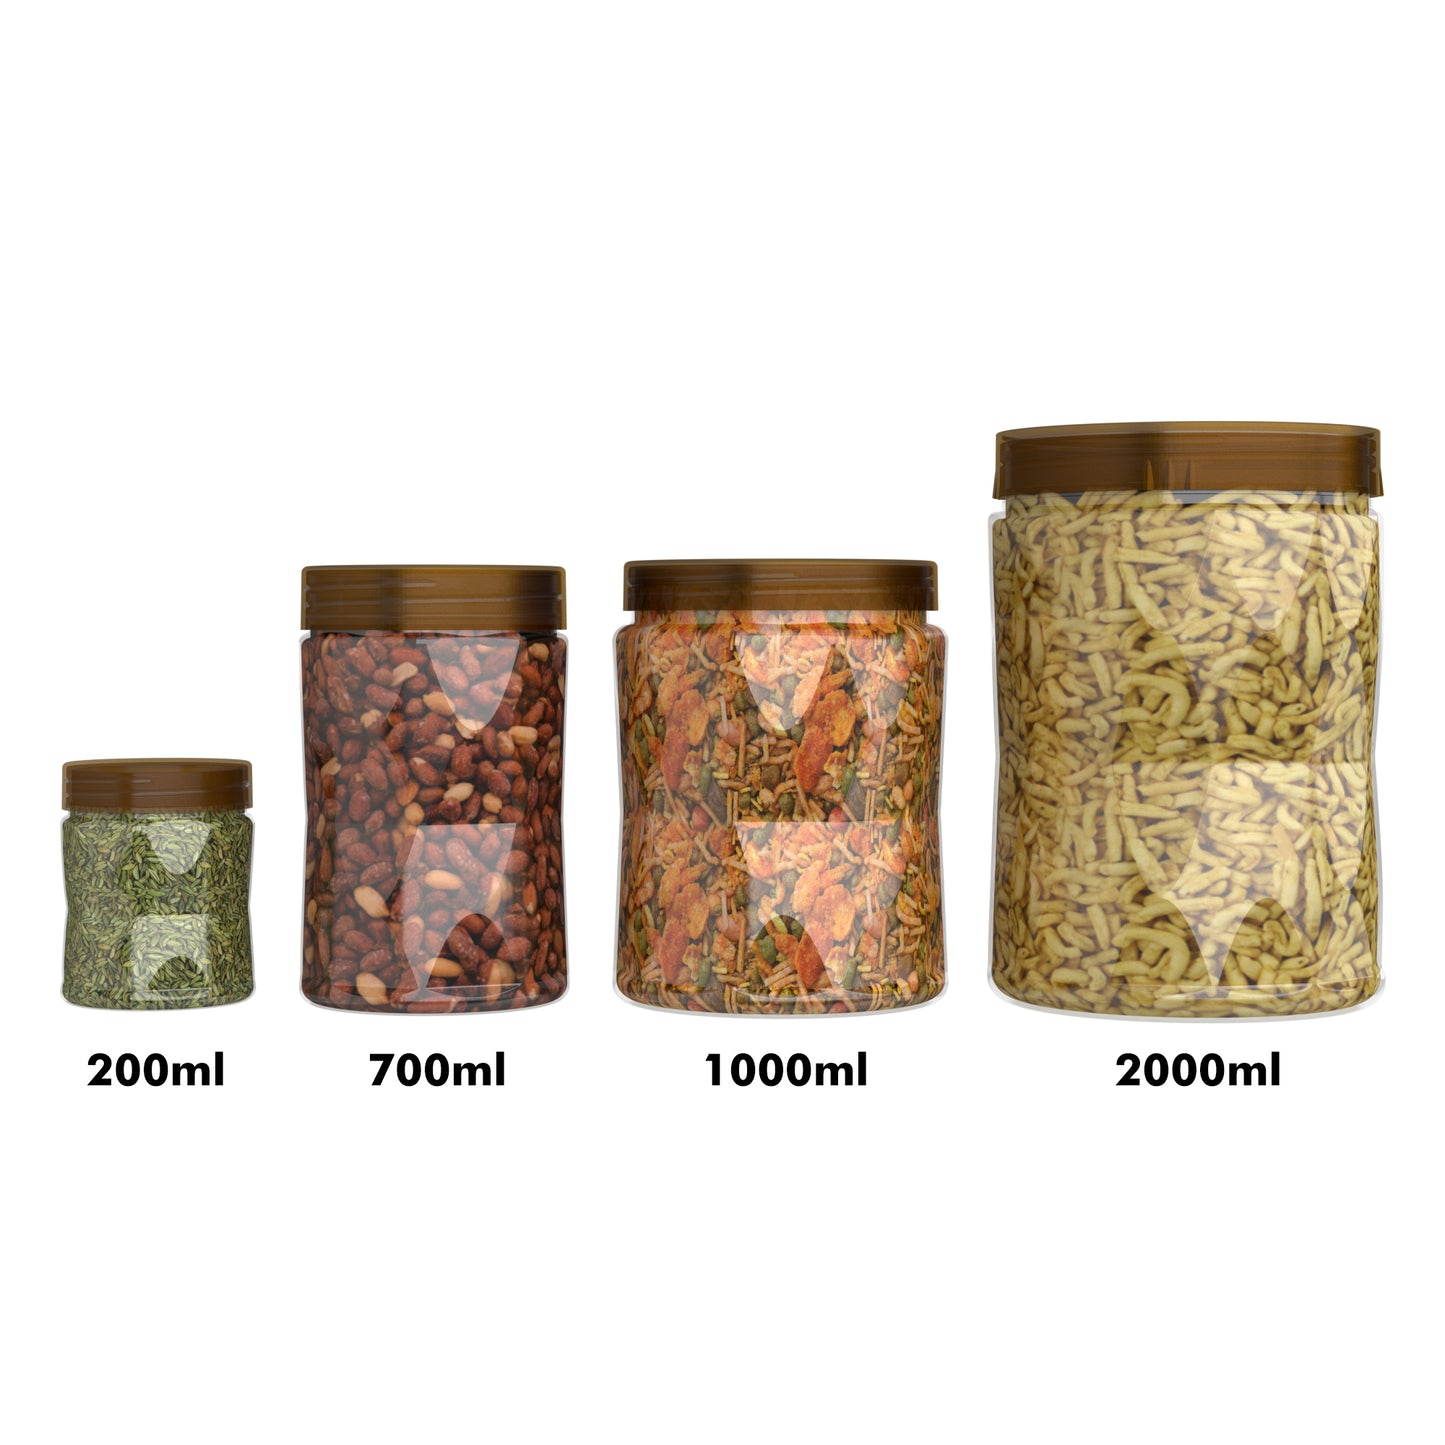 G-PET Diamonds Jars Plastic Container Coffee Cap (Set Of 12B) 2000ml (3pcs), 1000ml (3pcs), 700ml (3pcs), 200ml (3pcs)